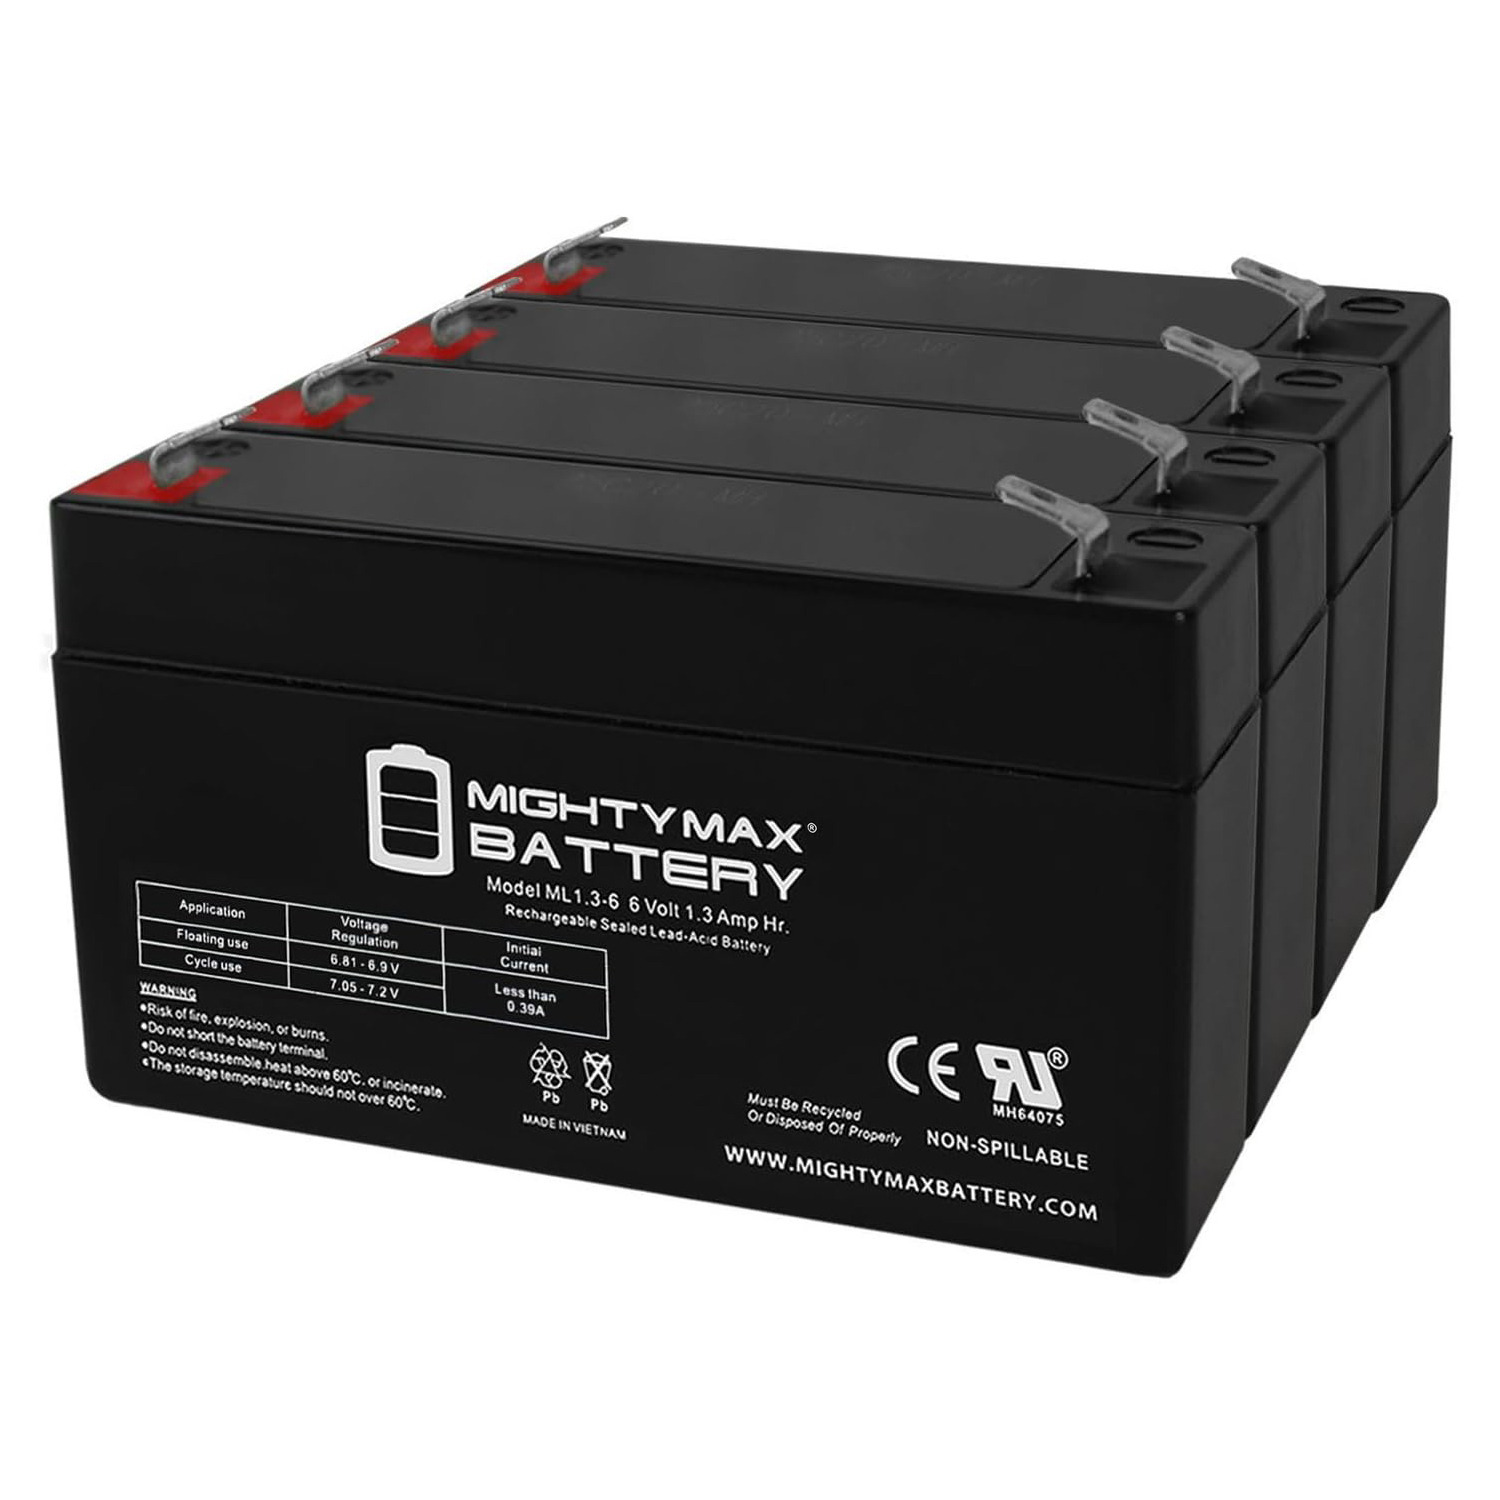 6V 1.3Ah Newport Medical Instruments E100I Ventilator Medical Battery - 4 Pack